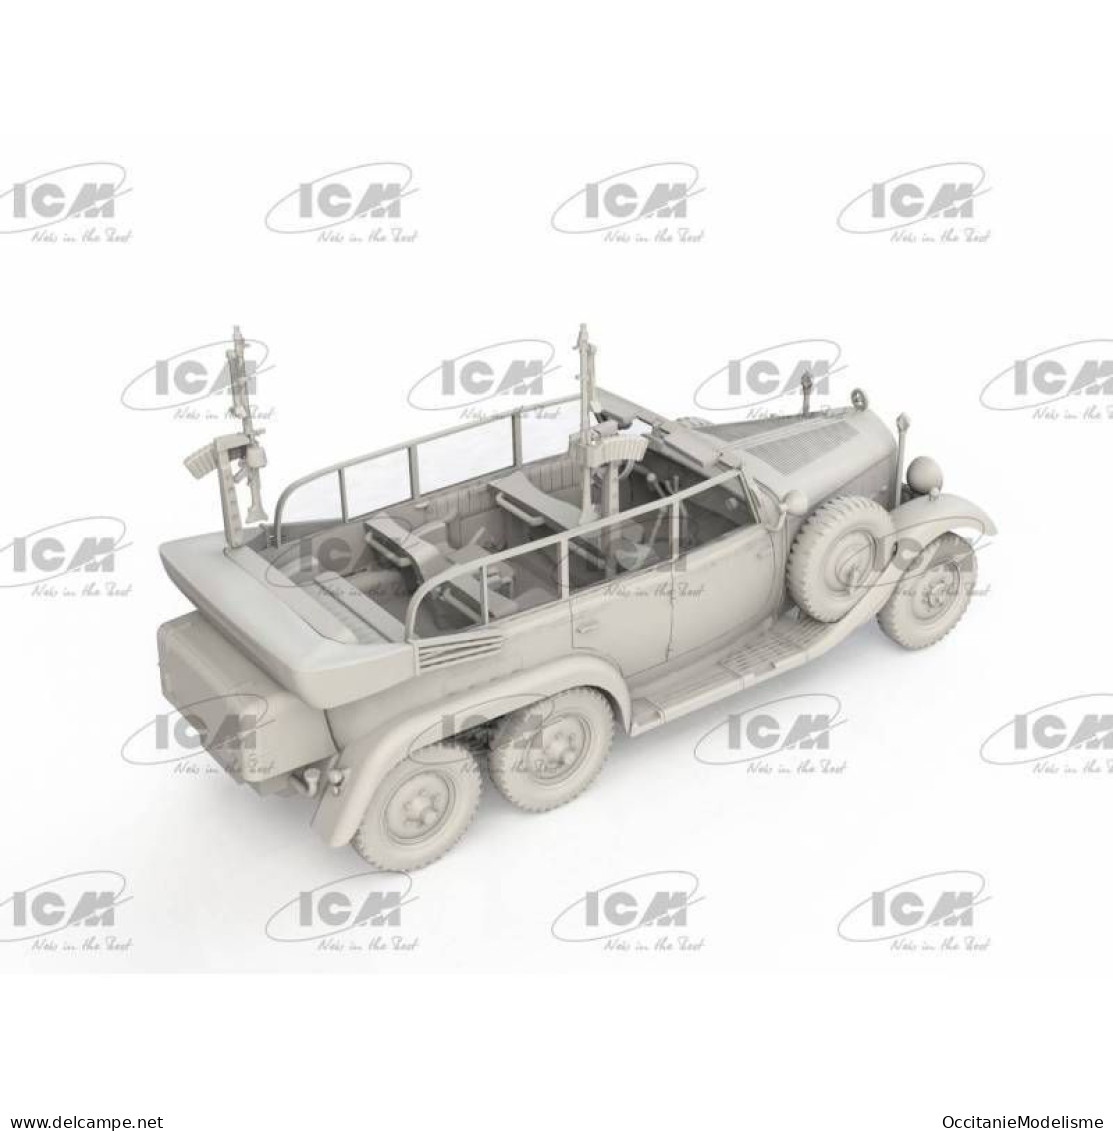 ICM - MERCEDES-BENZ TYPE G4 Partisanenwagen MG34 WWII Maquette Kit Plastique Réf. 72473 Neuf NBO 1/72 - Veicoli Militari